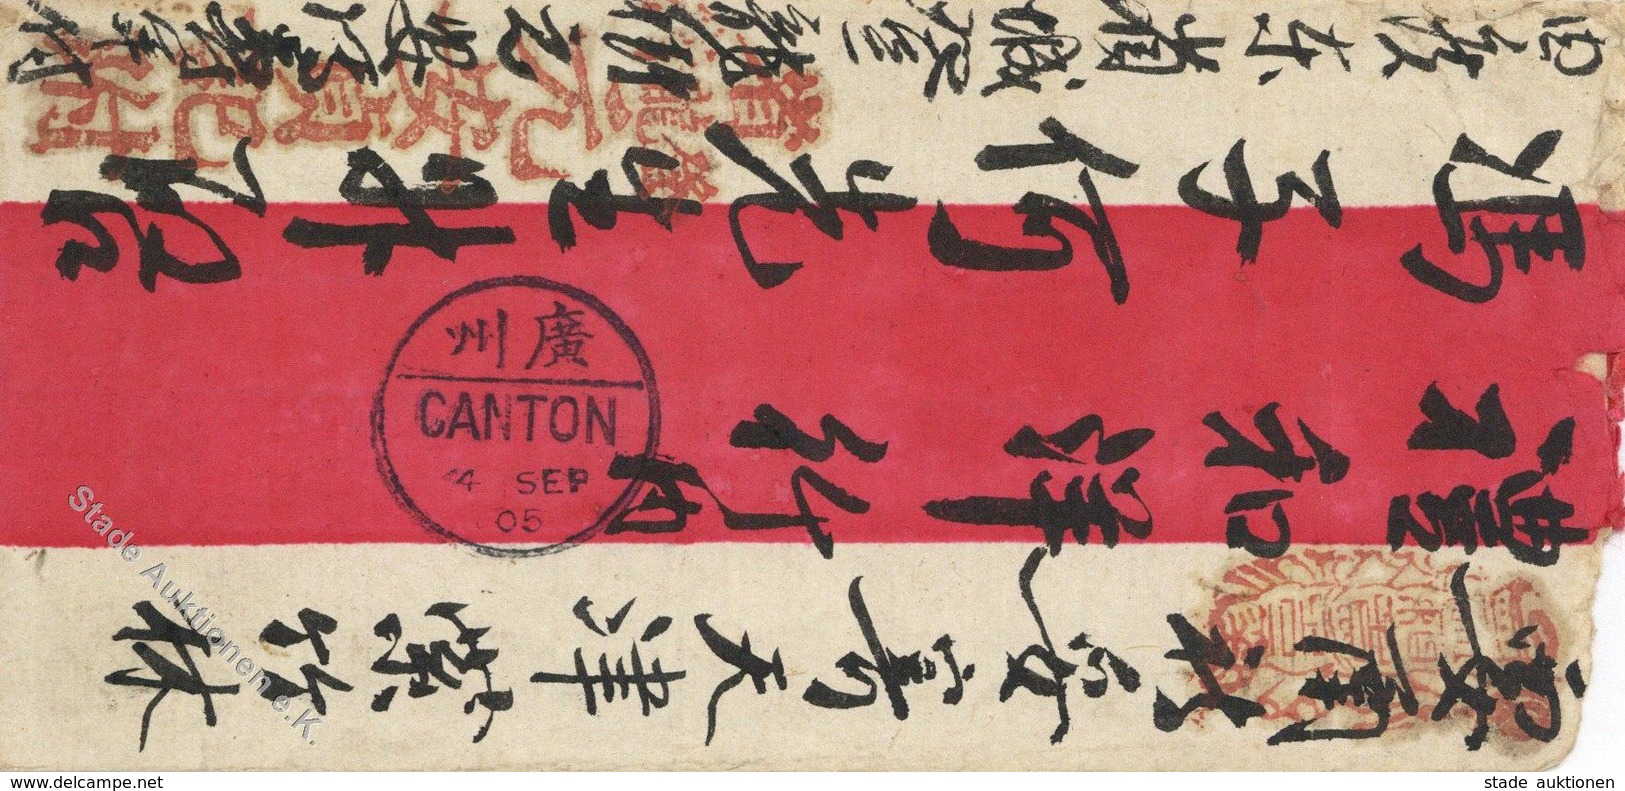 Kolonien CHINA - Dekorativer Chinabrief O Canton 1905 I Colonies - History